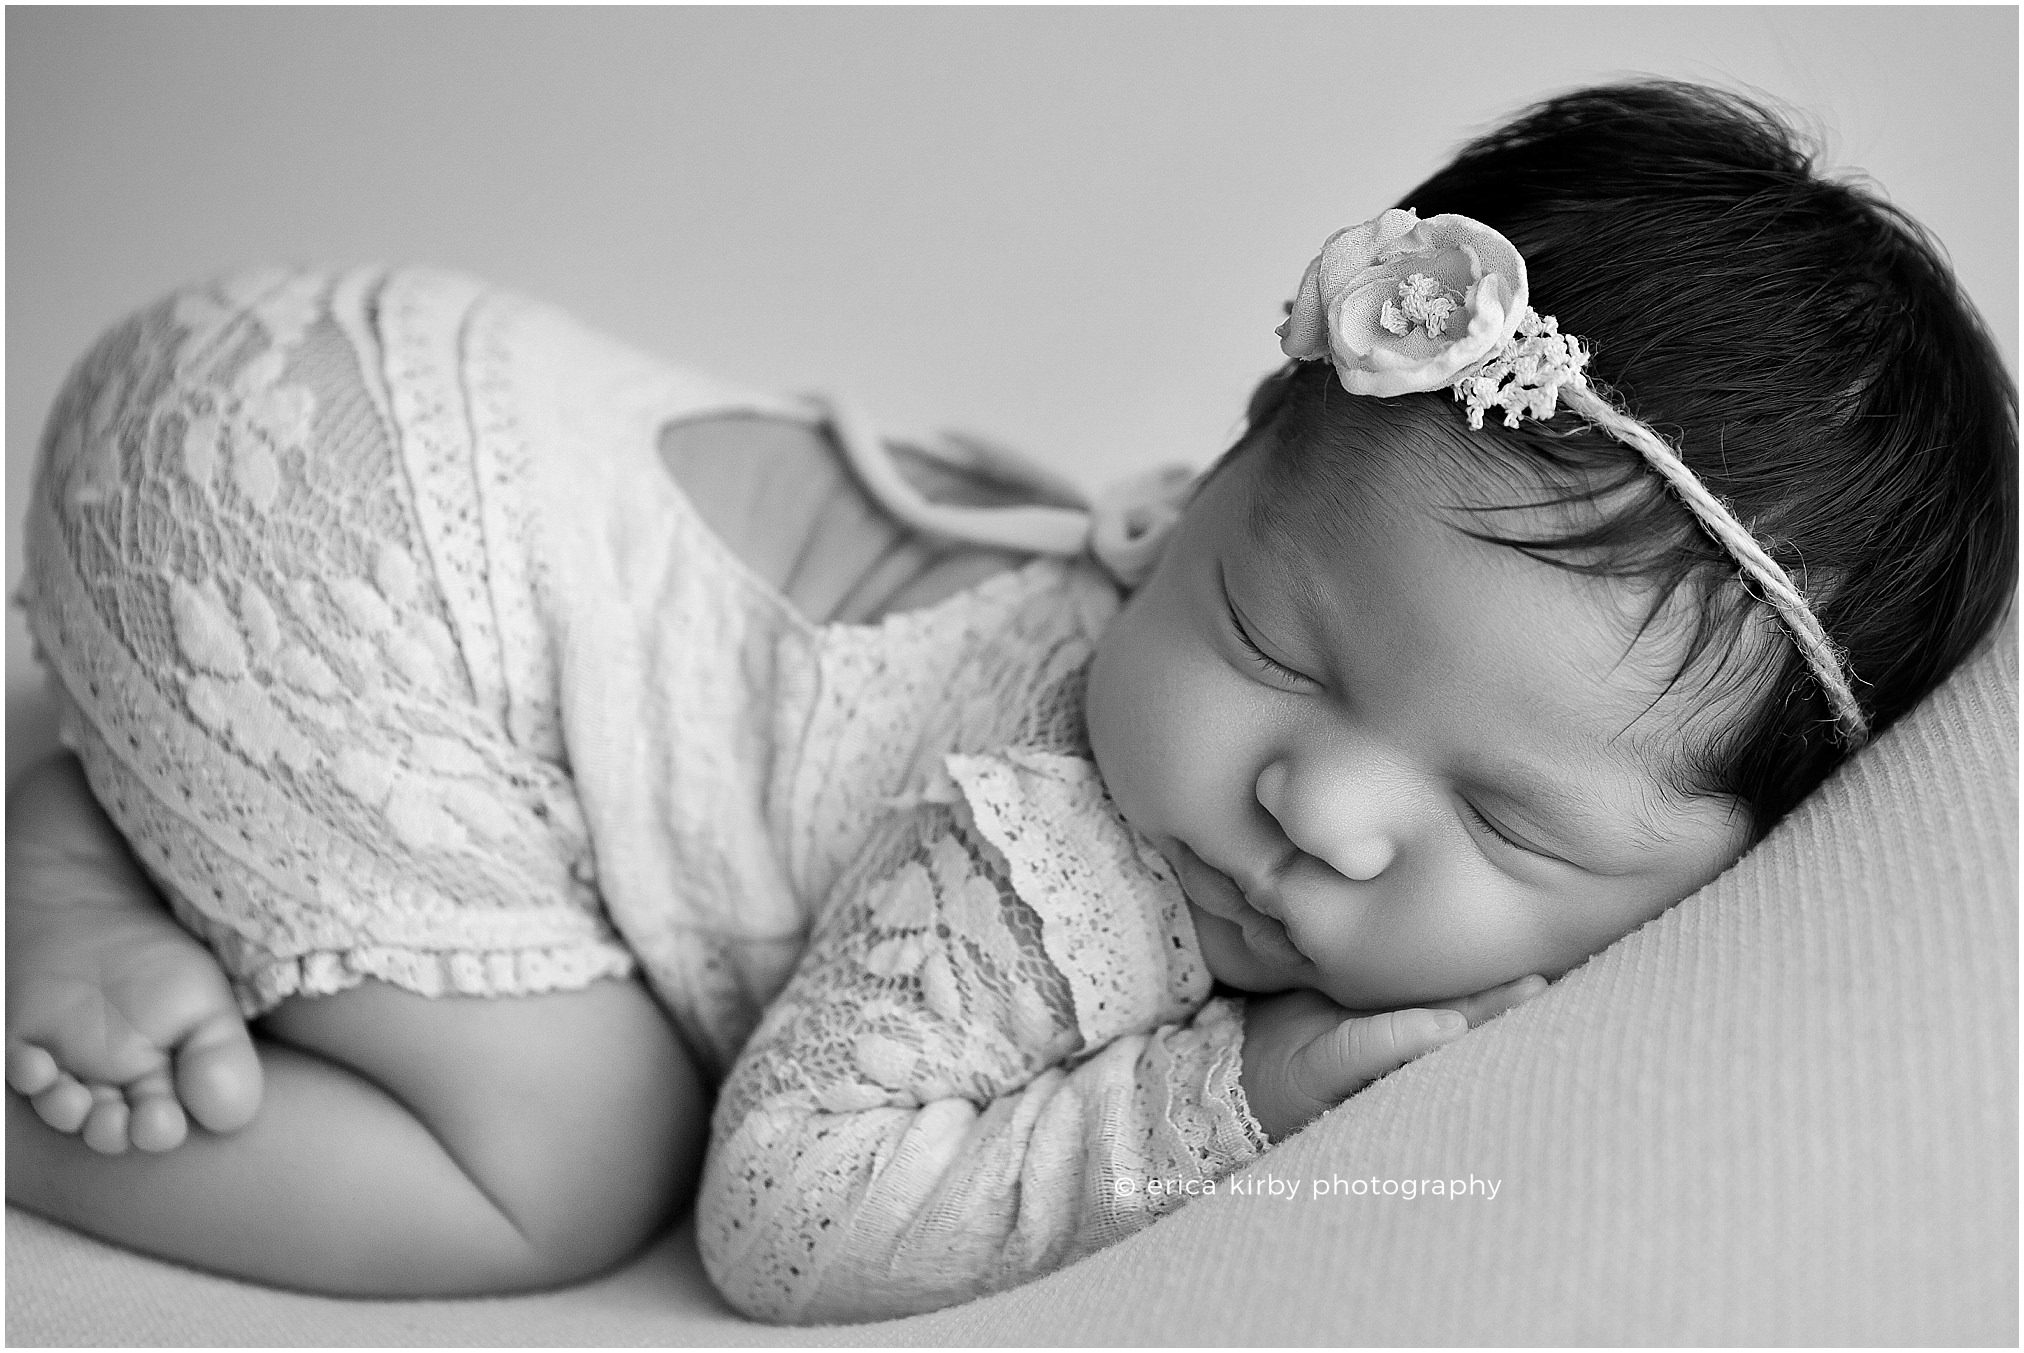 Newborn Photography Studio Rogers Arkansas - baby girl newborn photo session in Erica Kirby Photography's studio in Northwest AR